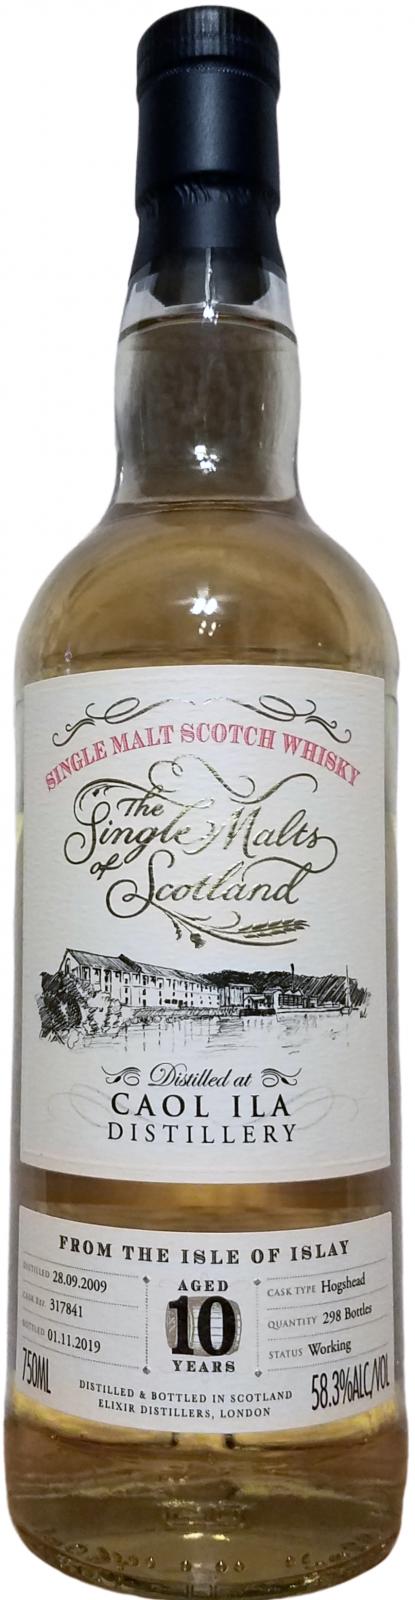 Caol Ila 2009 ElD The Single Malts of Scotland Bourbon Hogshead #317814 58.3% 750ml